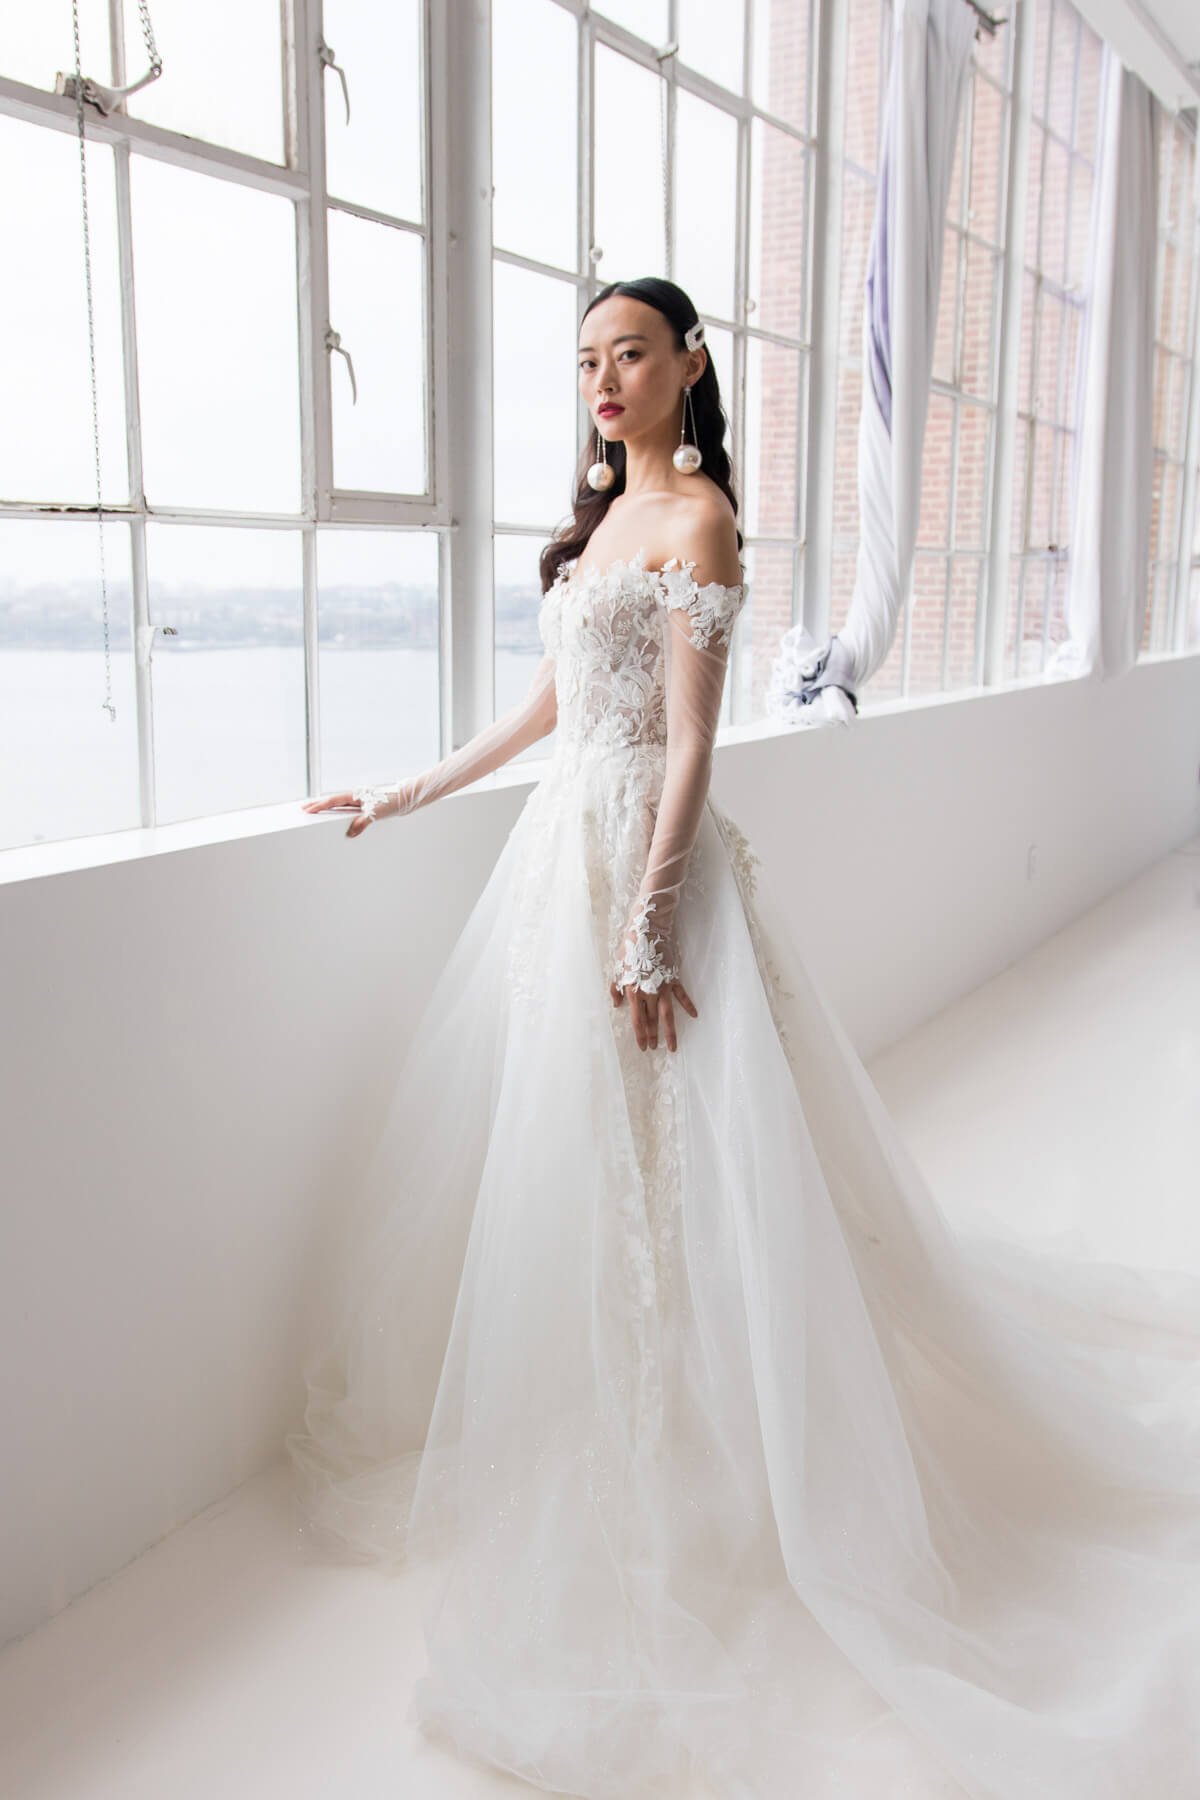 Morgan Newsom Galia Lahav wedding dress designer New York photographer-0635.jpg